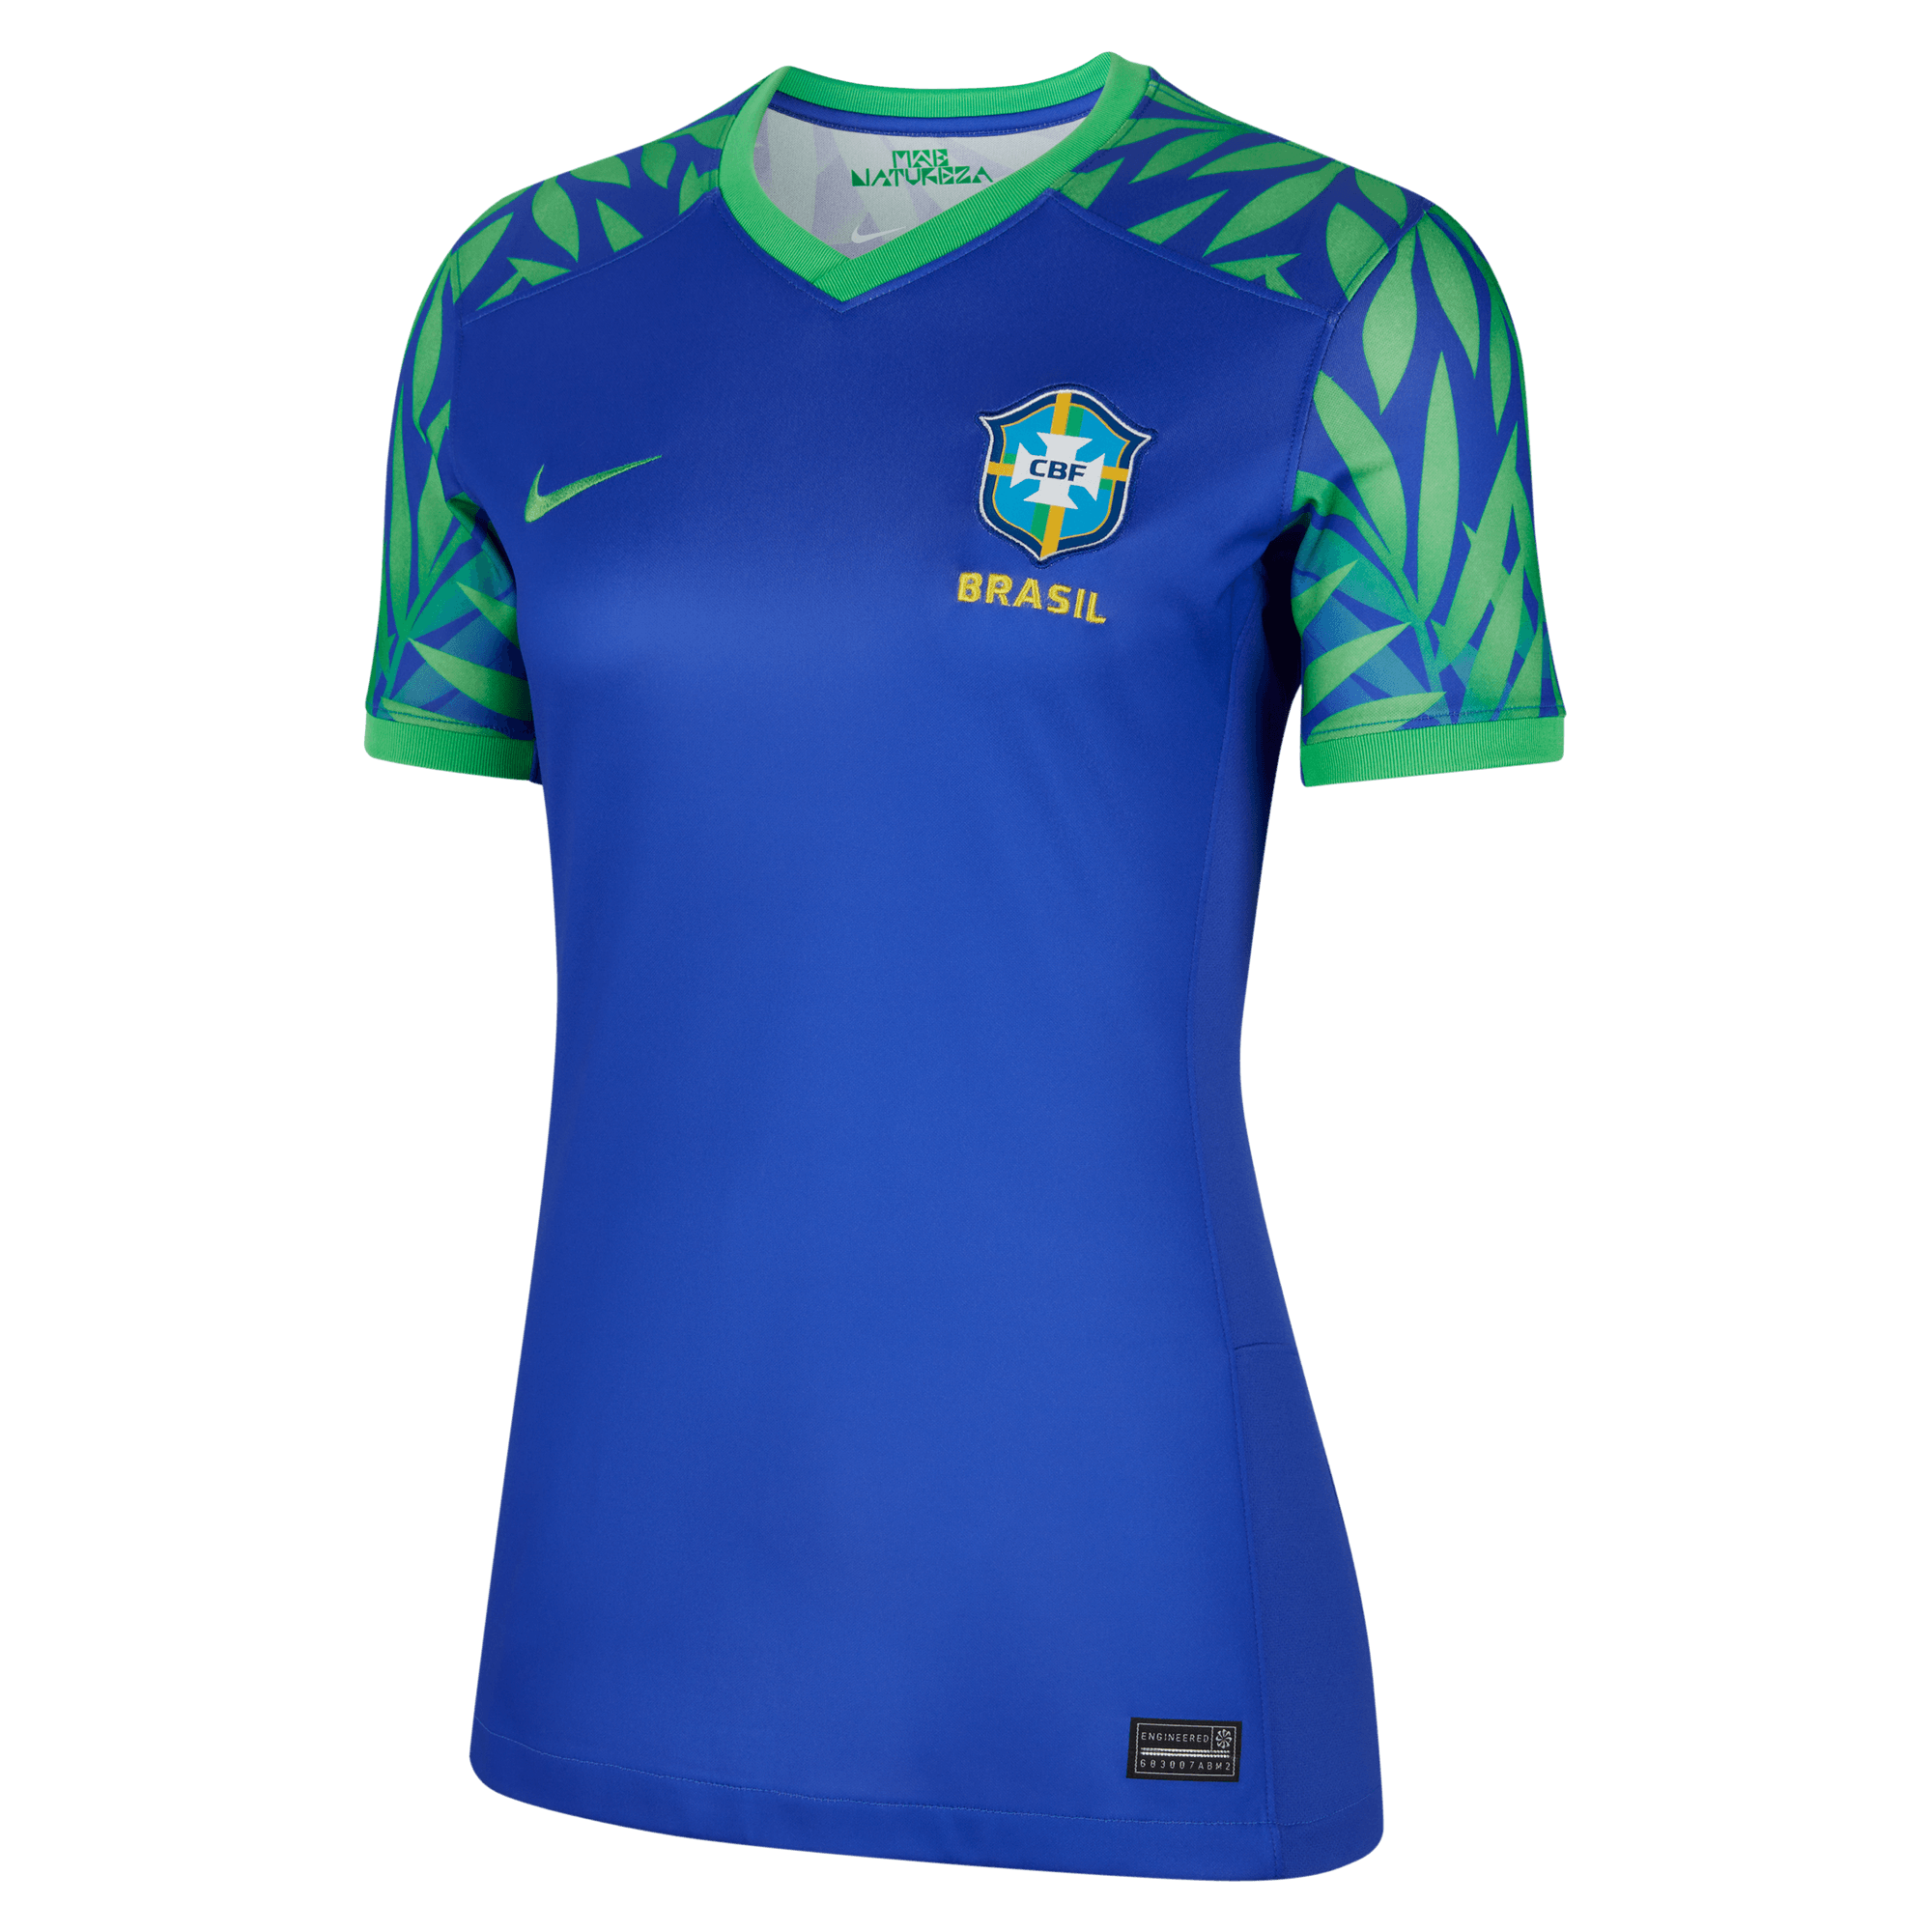 brazil national team soccer jersey